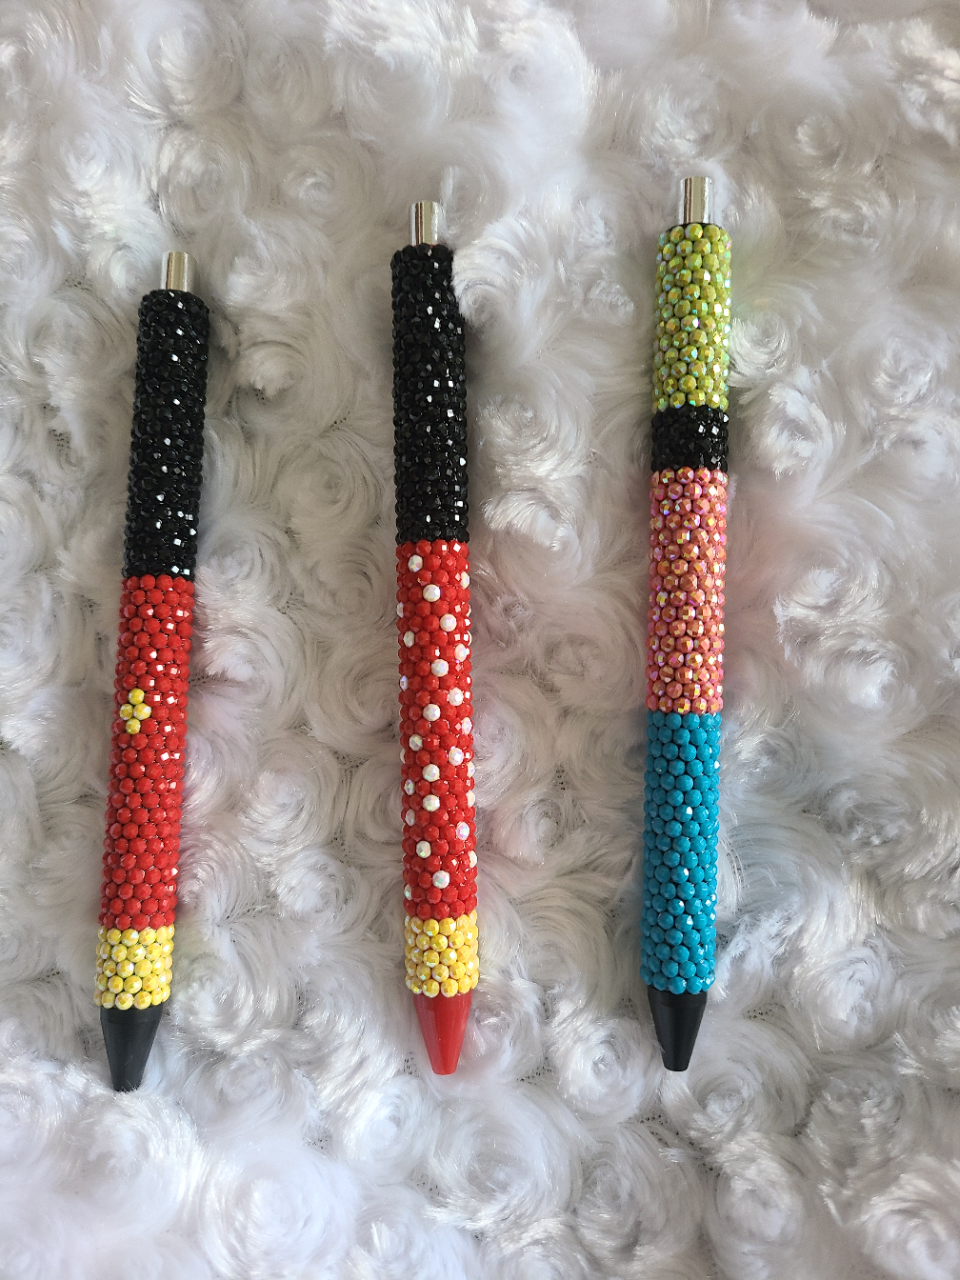 Mickey and Friends Inspired Rhinestone Pen Design